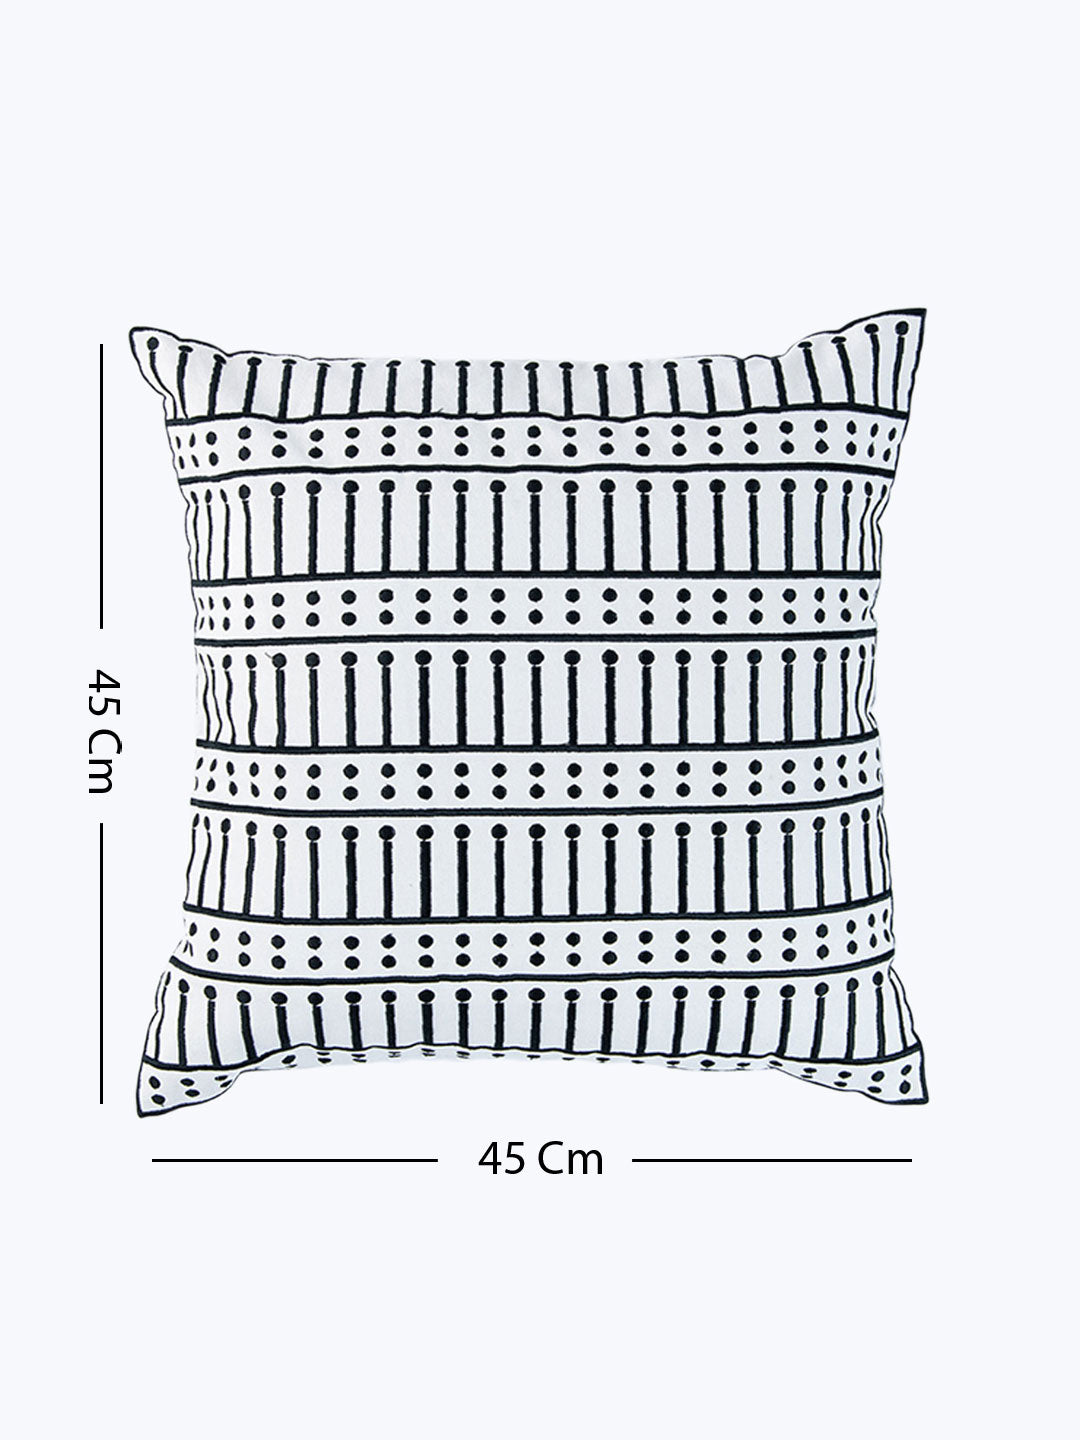 18x18 cushion covers